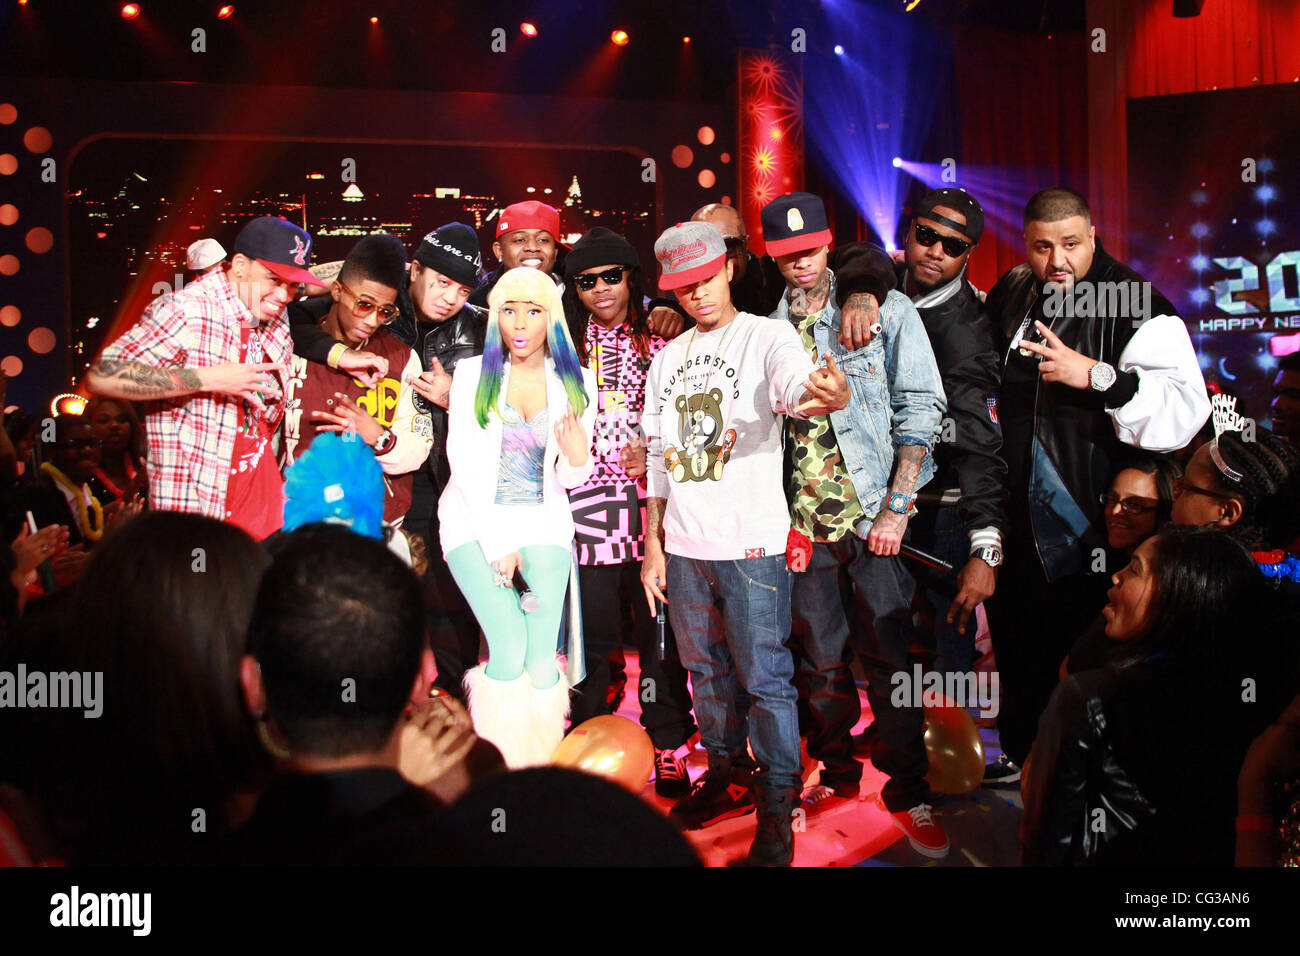 Cory Gunz, Lil Twist, Gudda Gudda, Nicki Minaj, Jae Millz, Lil Chuckee, Bird Man, Bow Wow, Tyga, Mack Maine  BET's '106 and Park' New Years Eve show New York City, USA - 31.12.10 Stock Photo